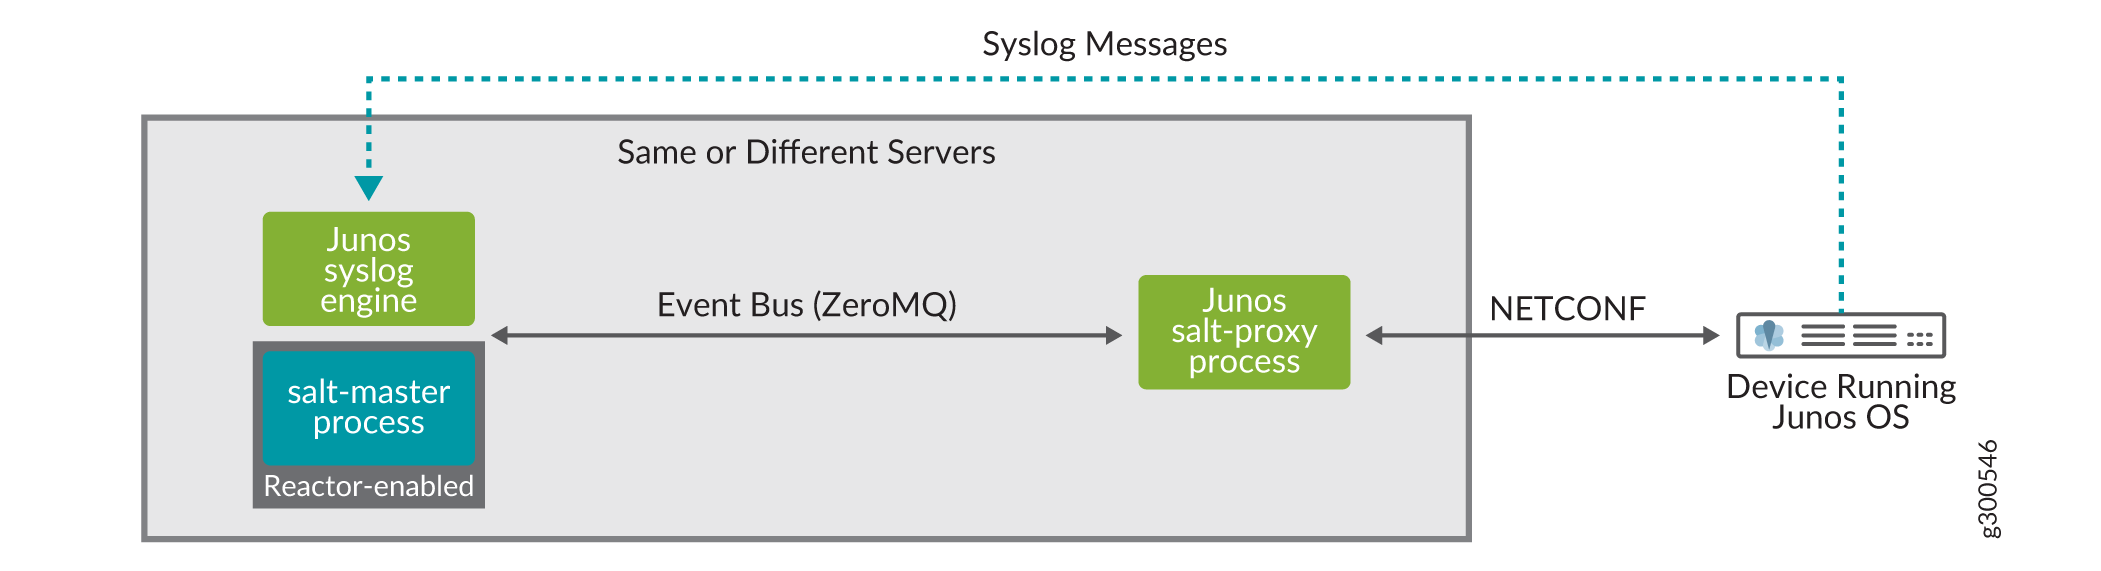 Junos Syslog Engine